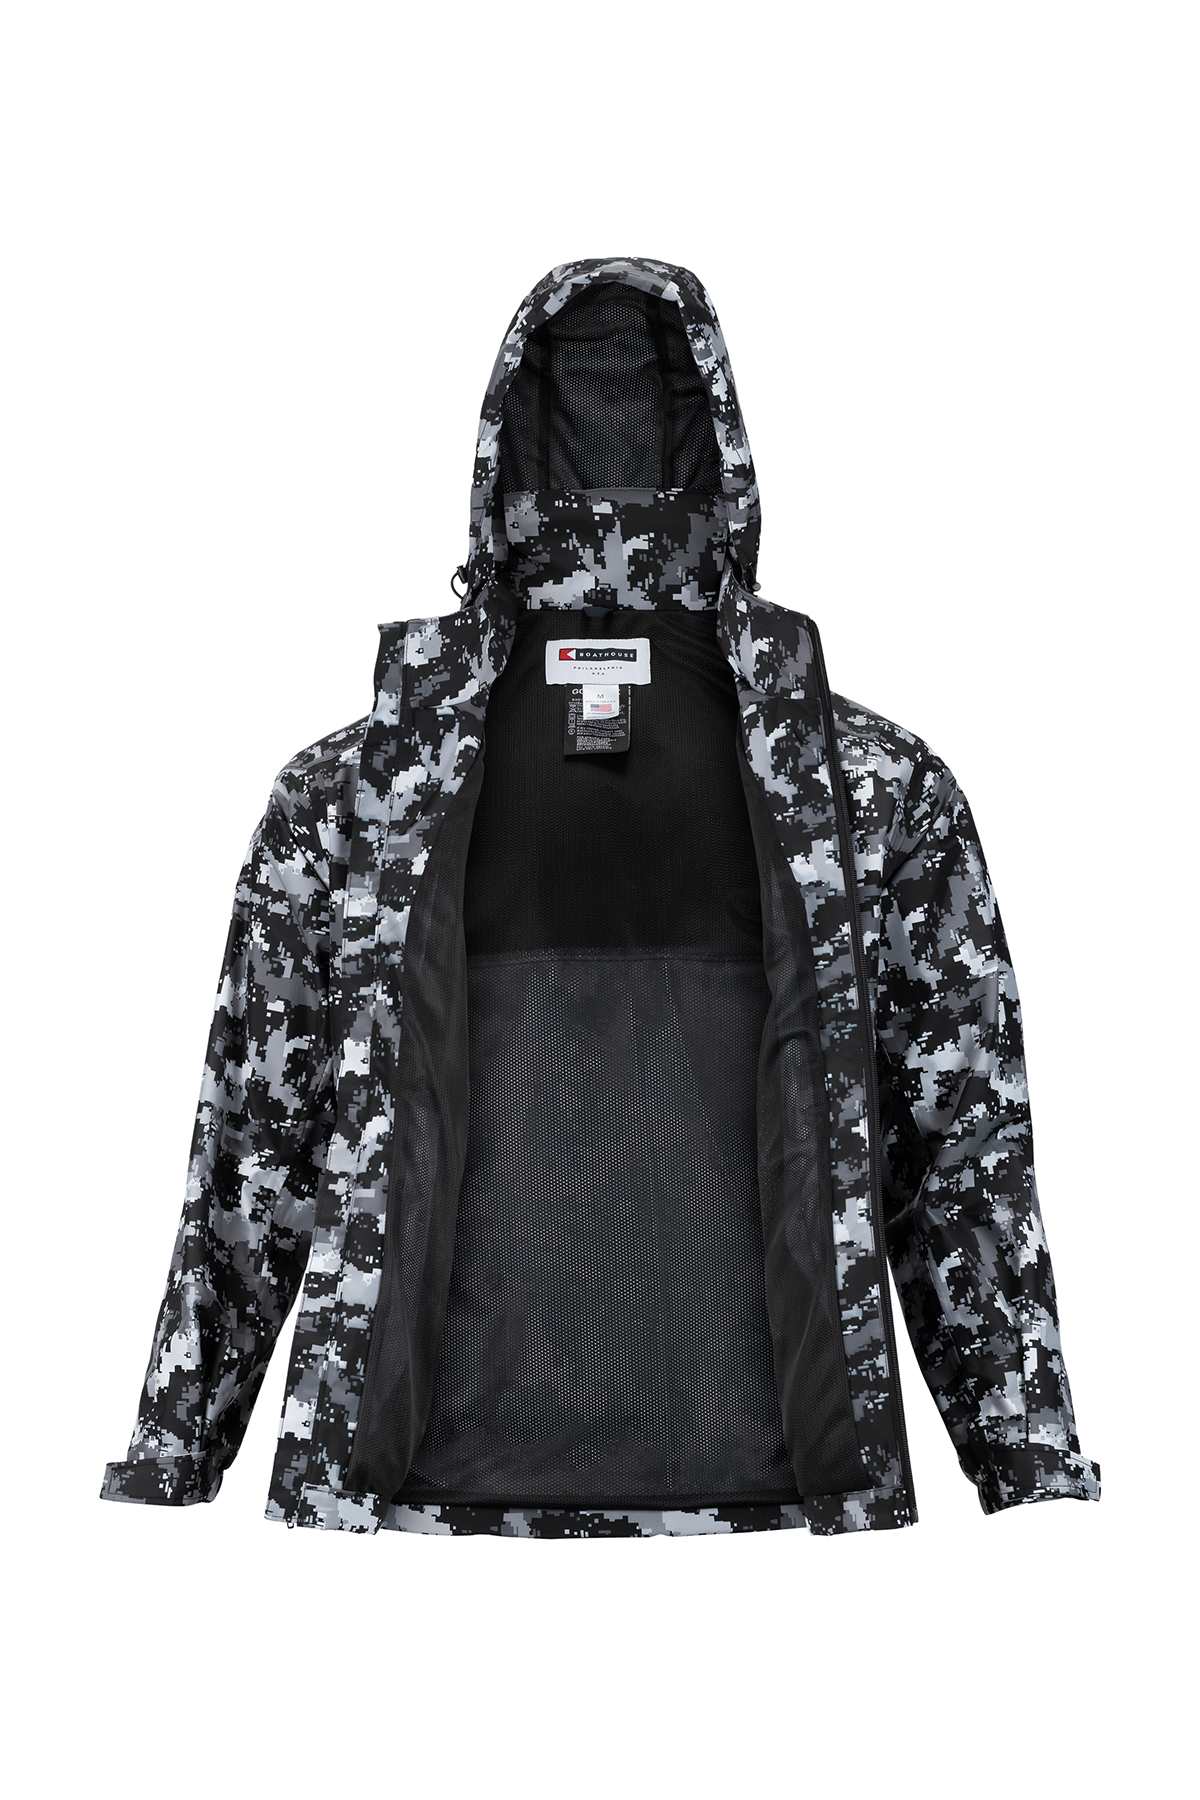 Limited Edition GORE-TEX® Digi Camo Waterproof Barrier Jacket